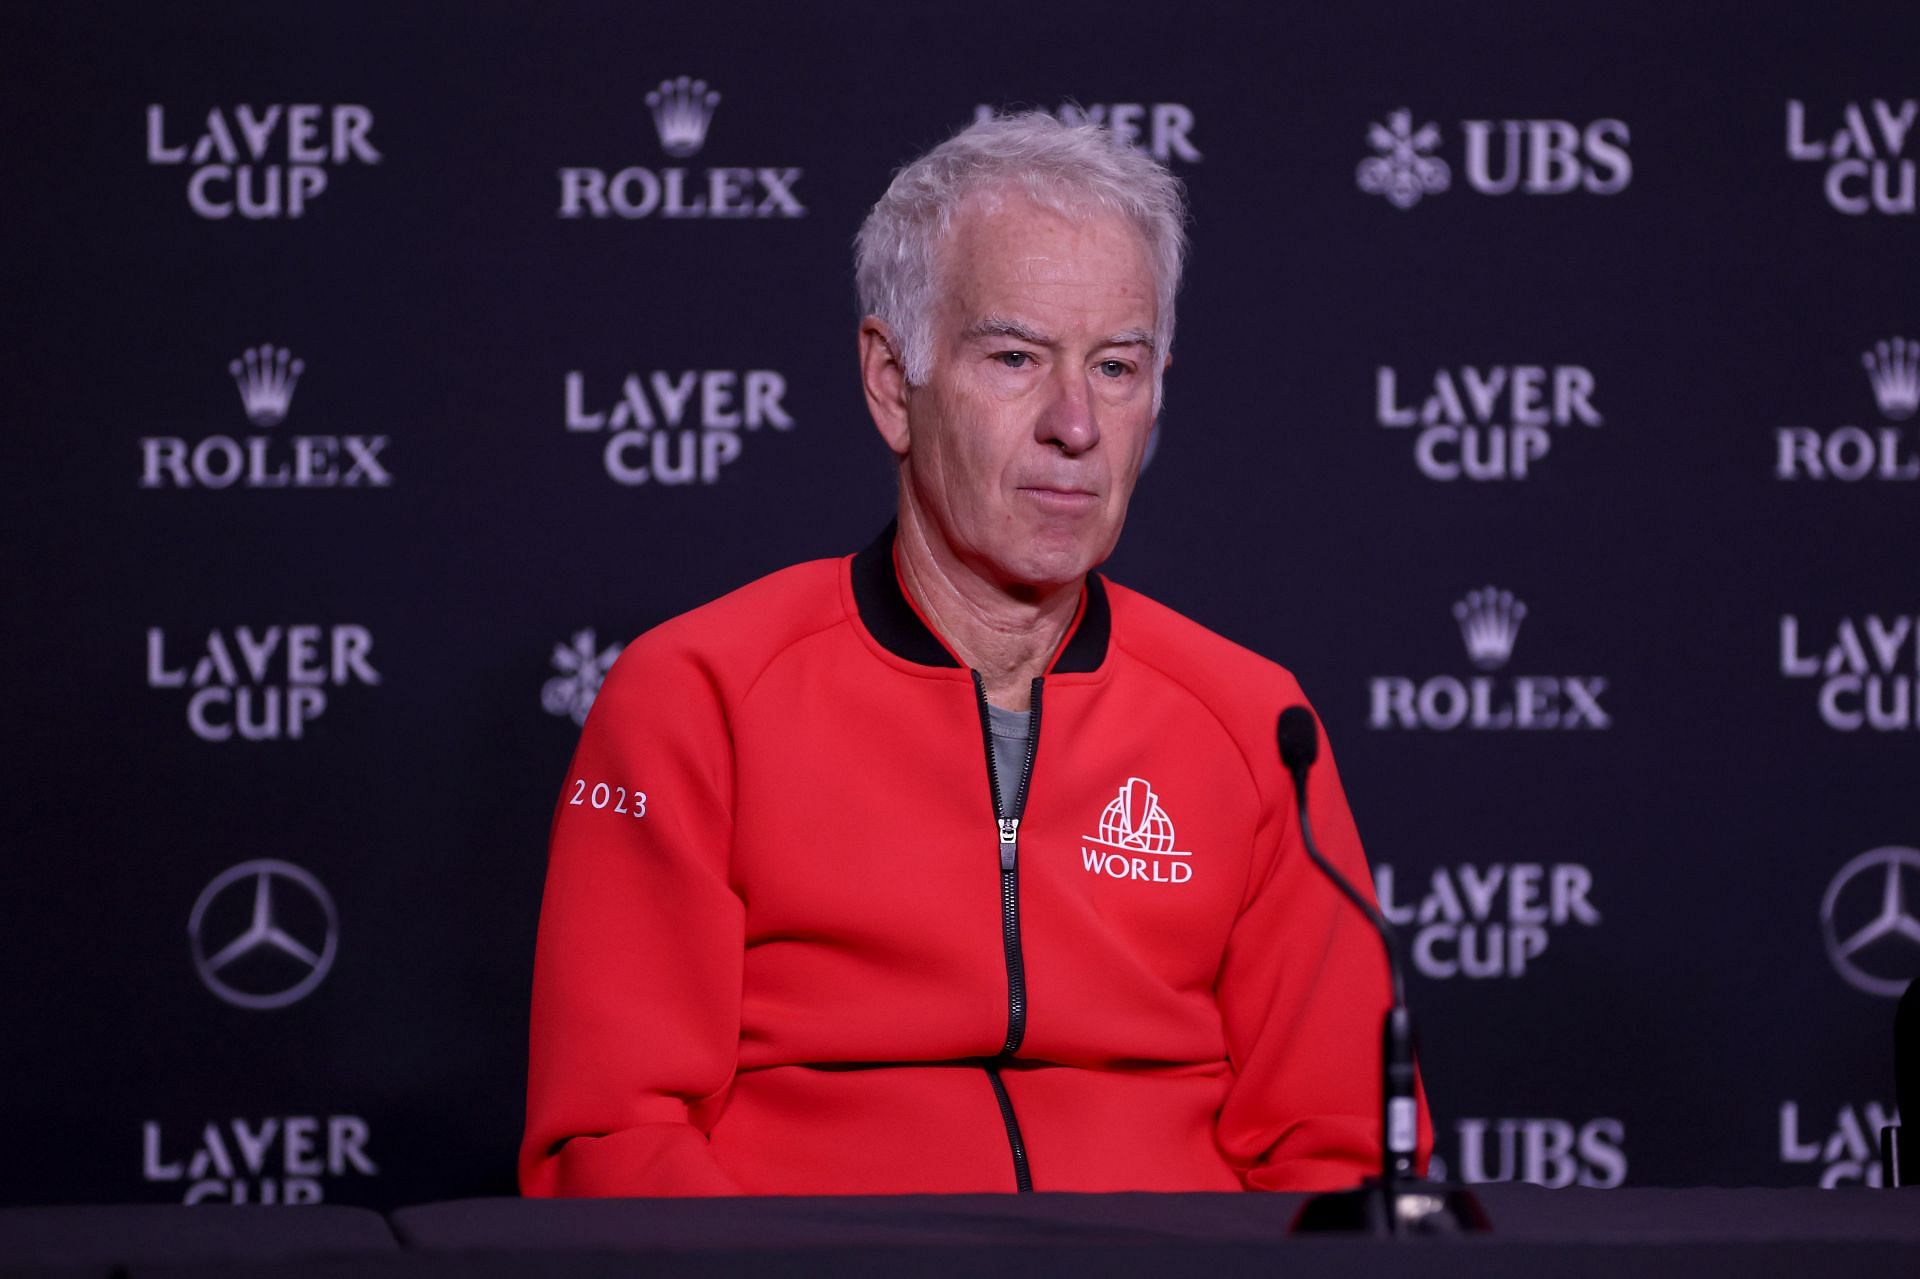 John McEnroe at the 2023 Laver Cup